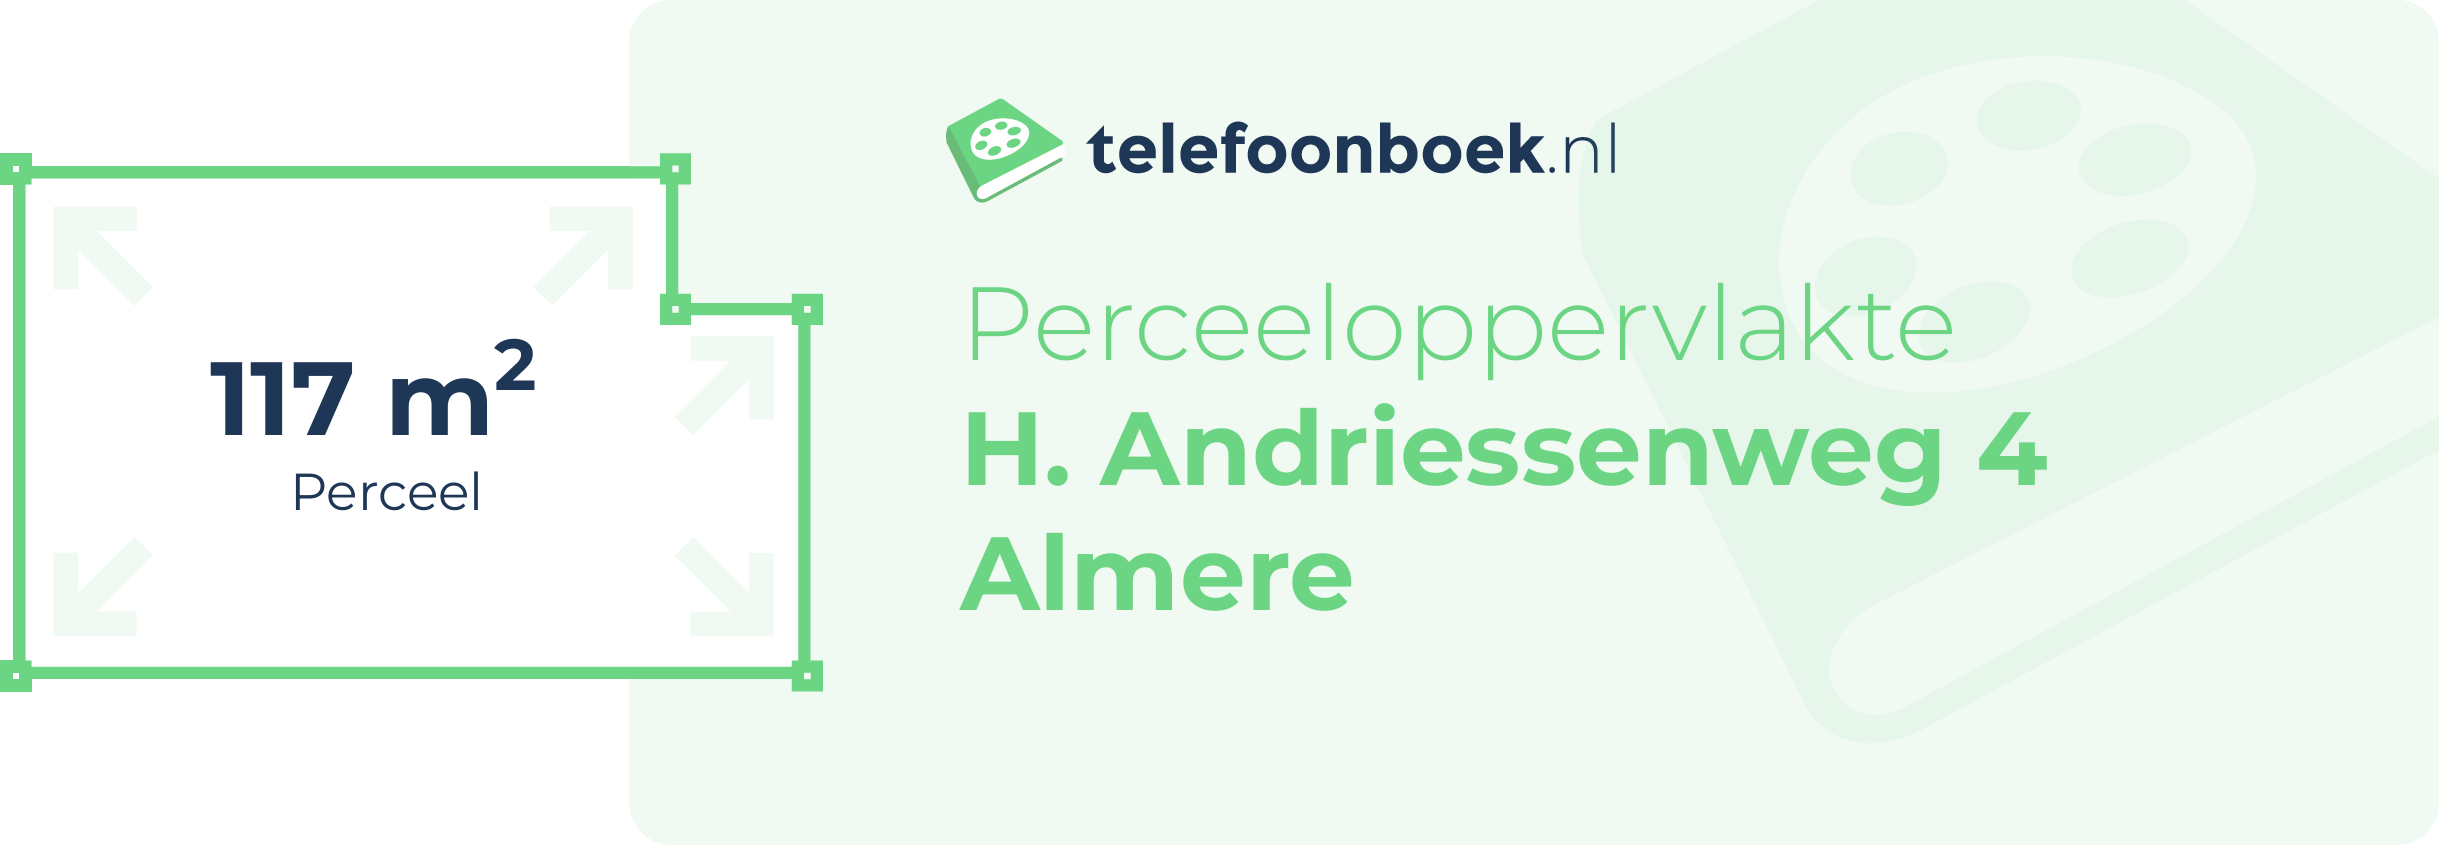 Perceeloppervlakte H. Andriessenweg 4 Almere